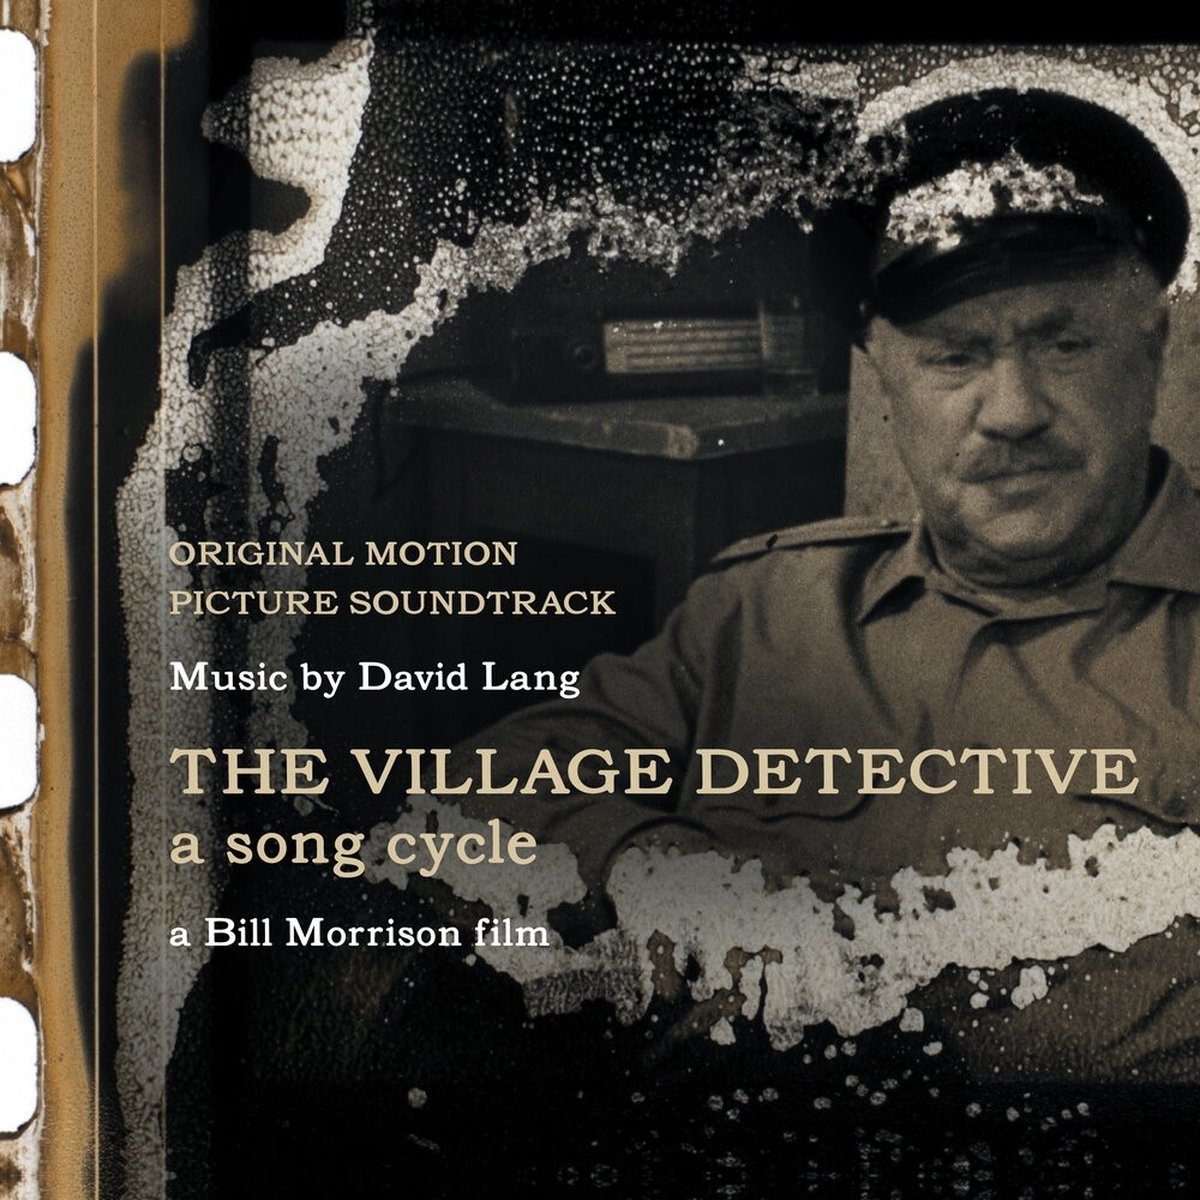 Frode Andersen - The Village Detective. A Song Cycle (CD) - Frode Andersen